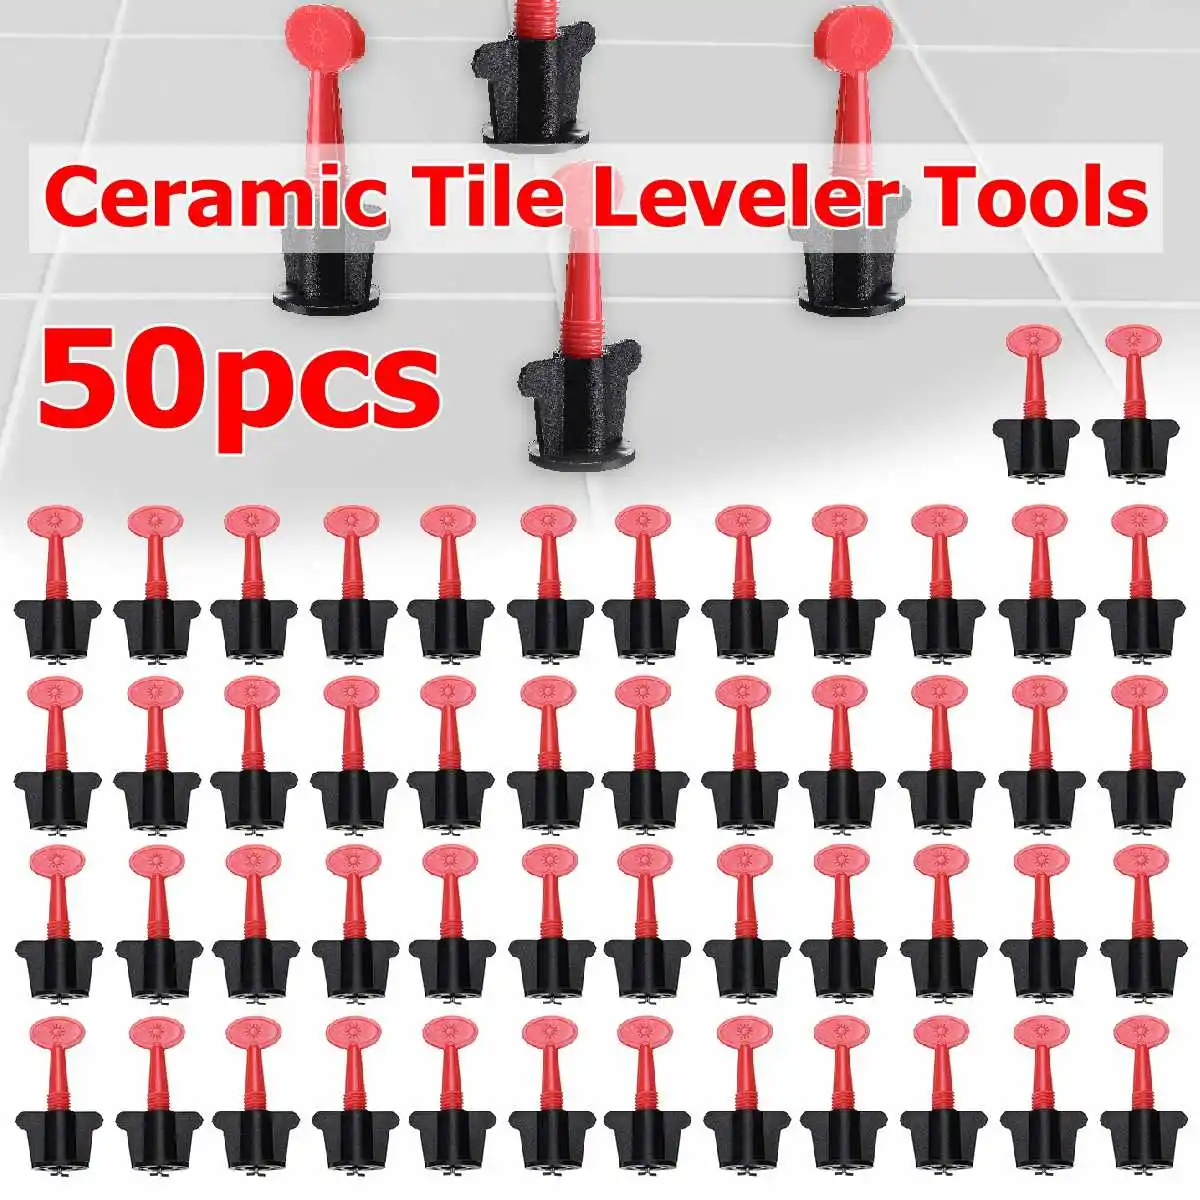 

50Pcs Flat Ceramic Floor Wall Construction Tools Reusable Tile Level Wedges Tile Spacers Kittile Leveling System Kit For Tile